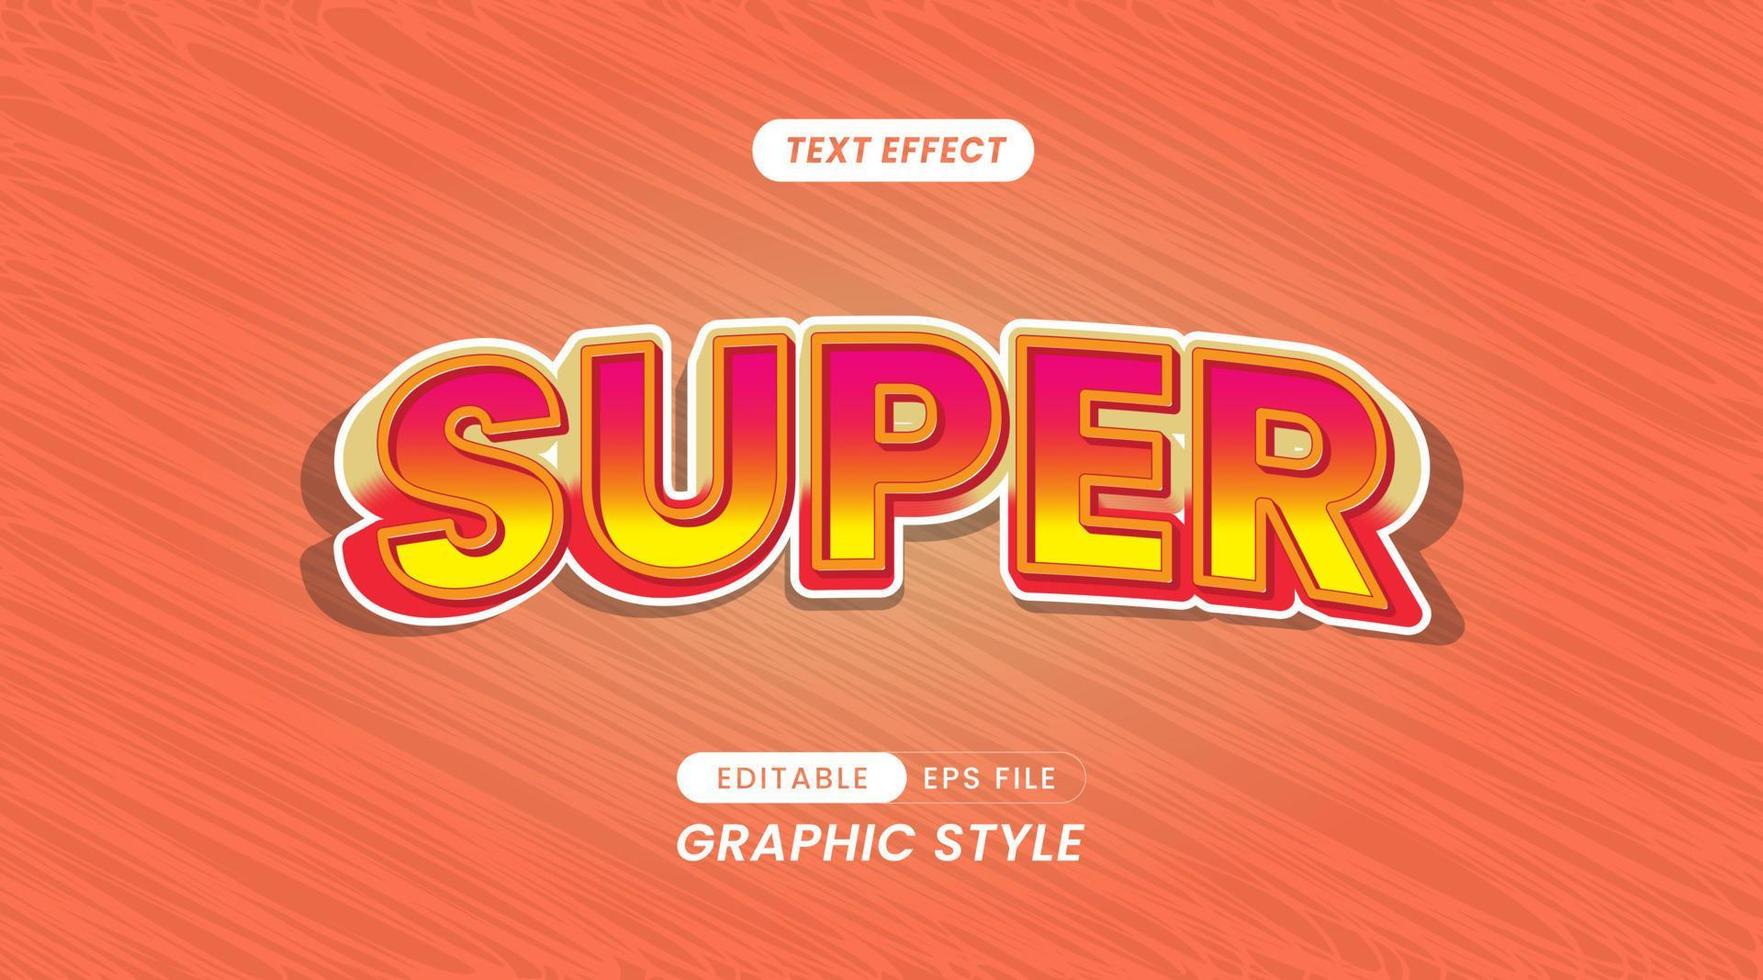 Text Effects - Super 3D Editable Text. vector